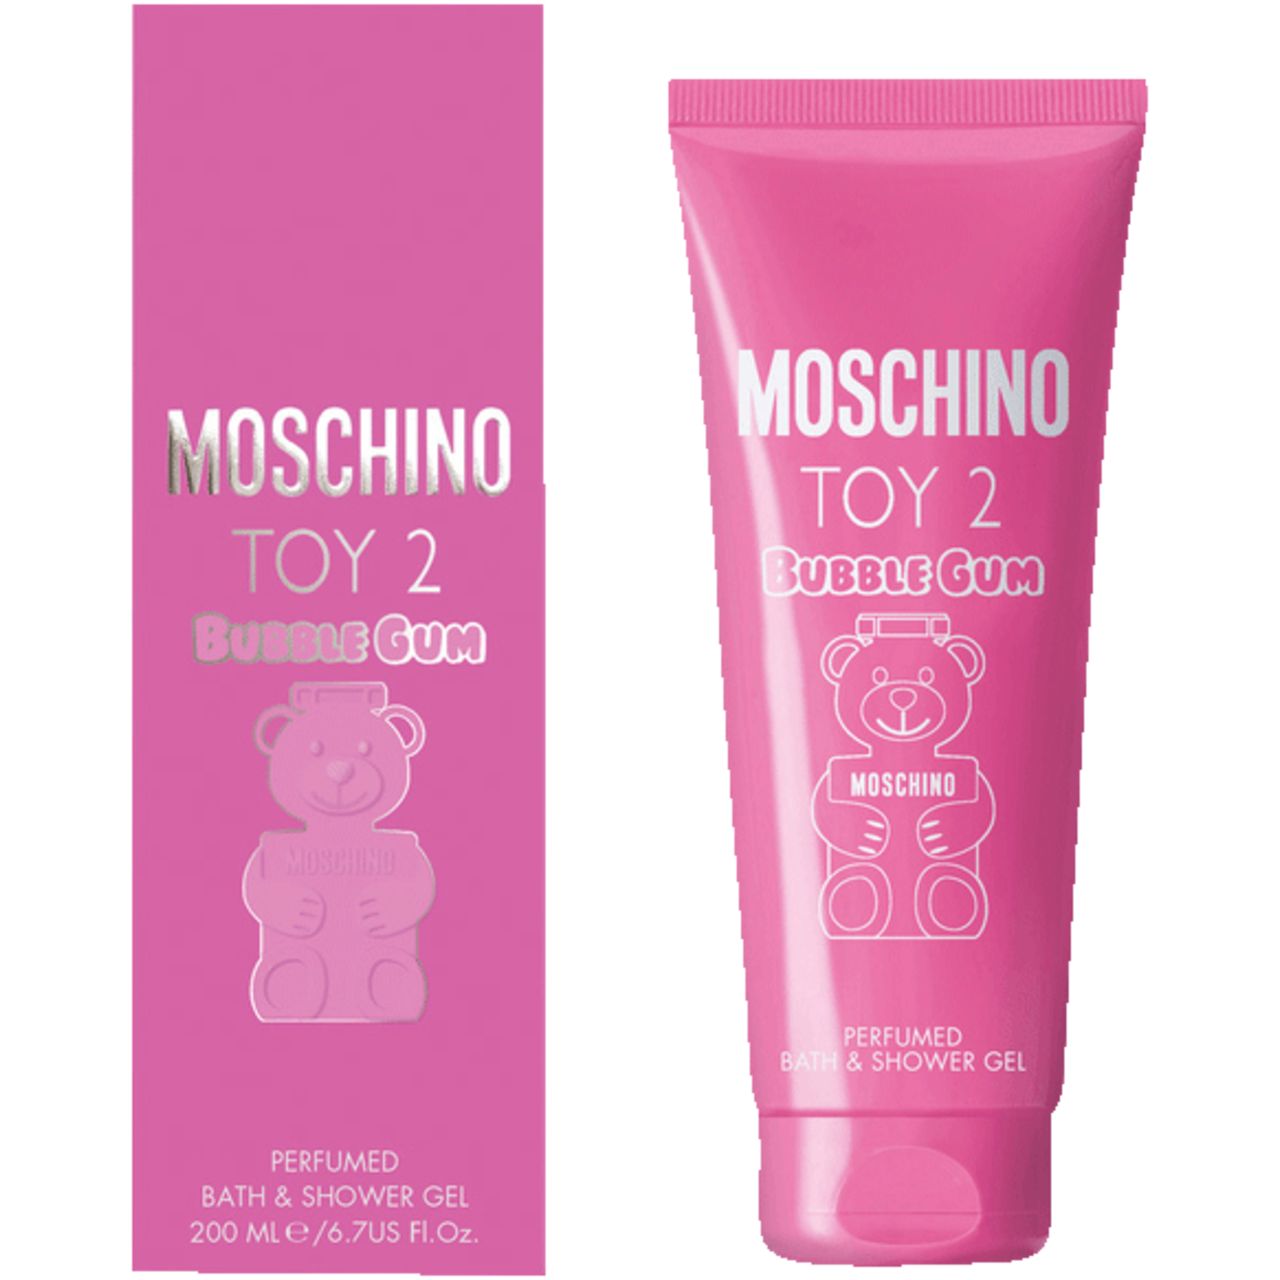 Moschino, Toy 2 Bubble Gum Shower Gel